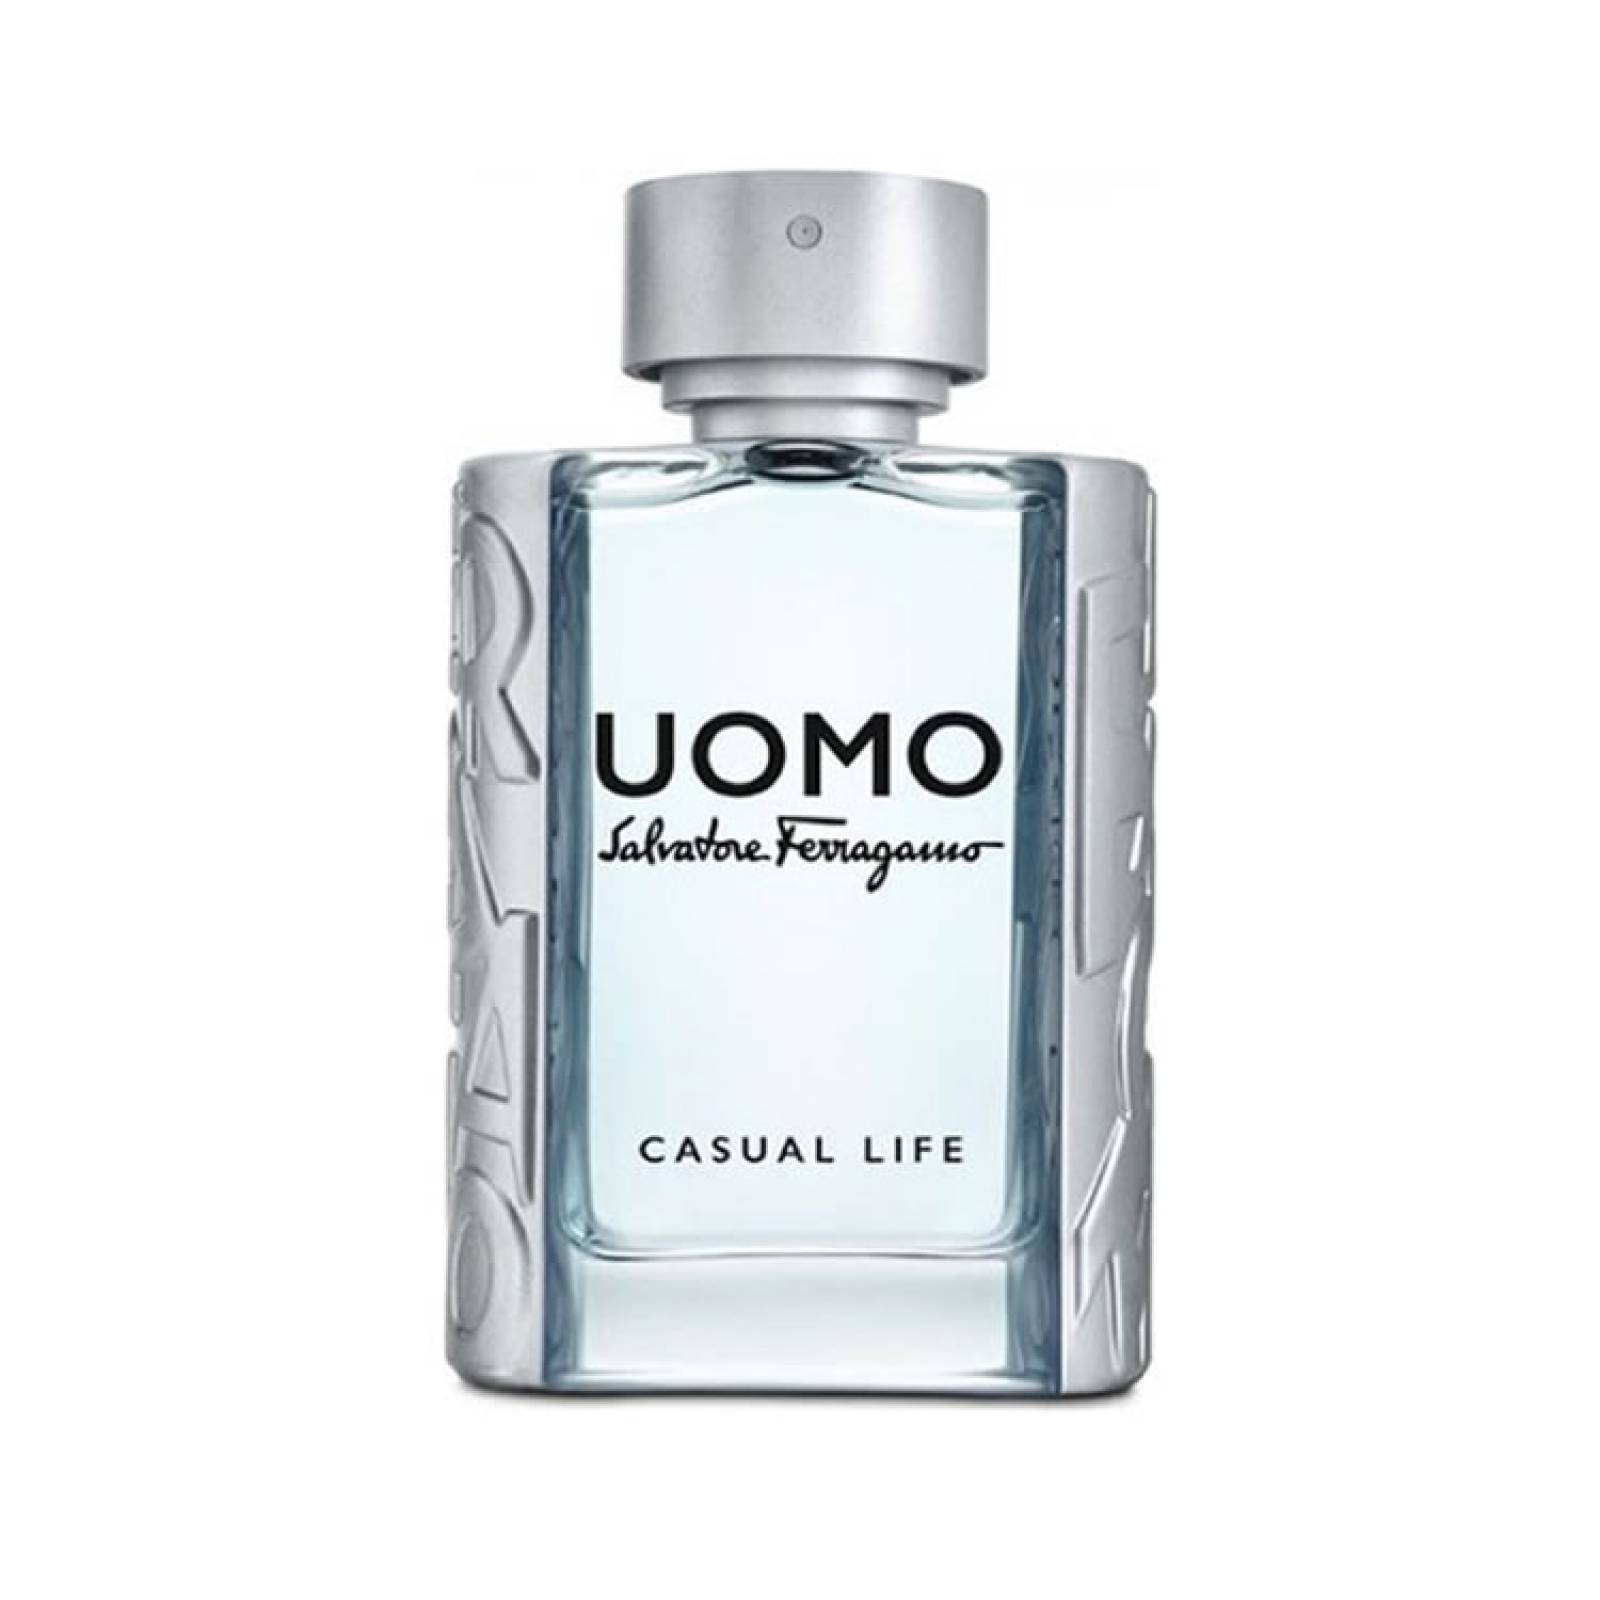 Perfume Casual Life UOMO Salvatore Ferragamo Eau De Toilette 100 ml.